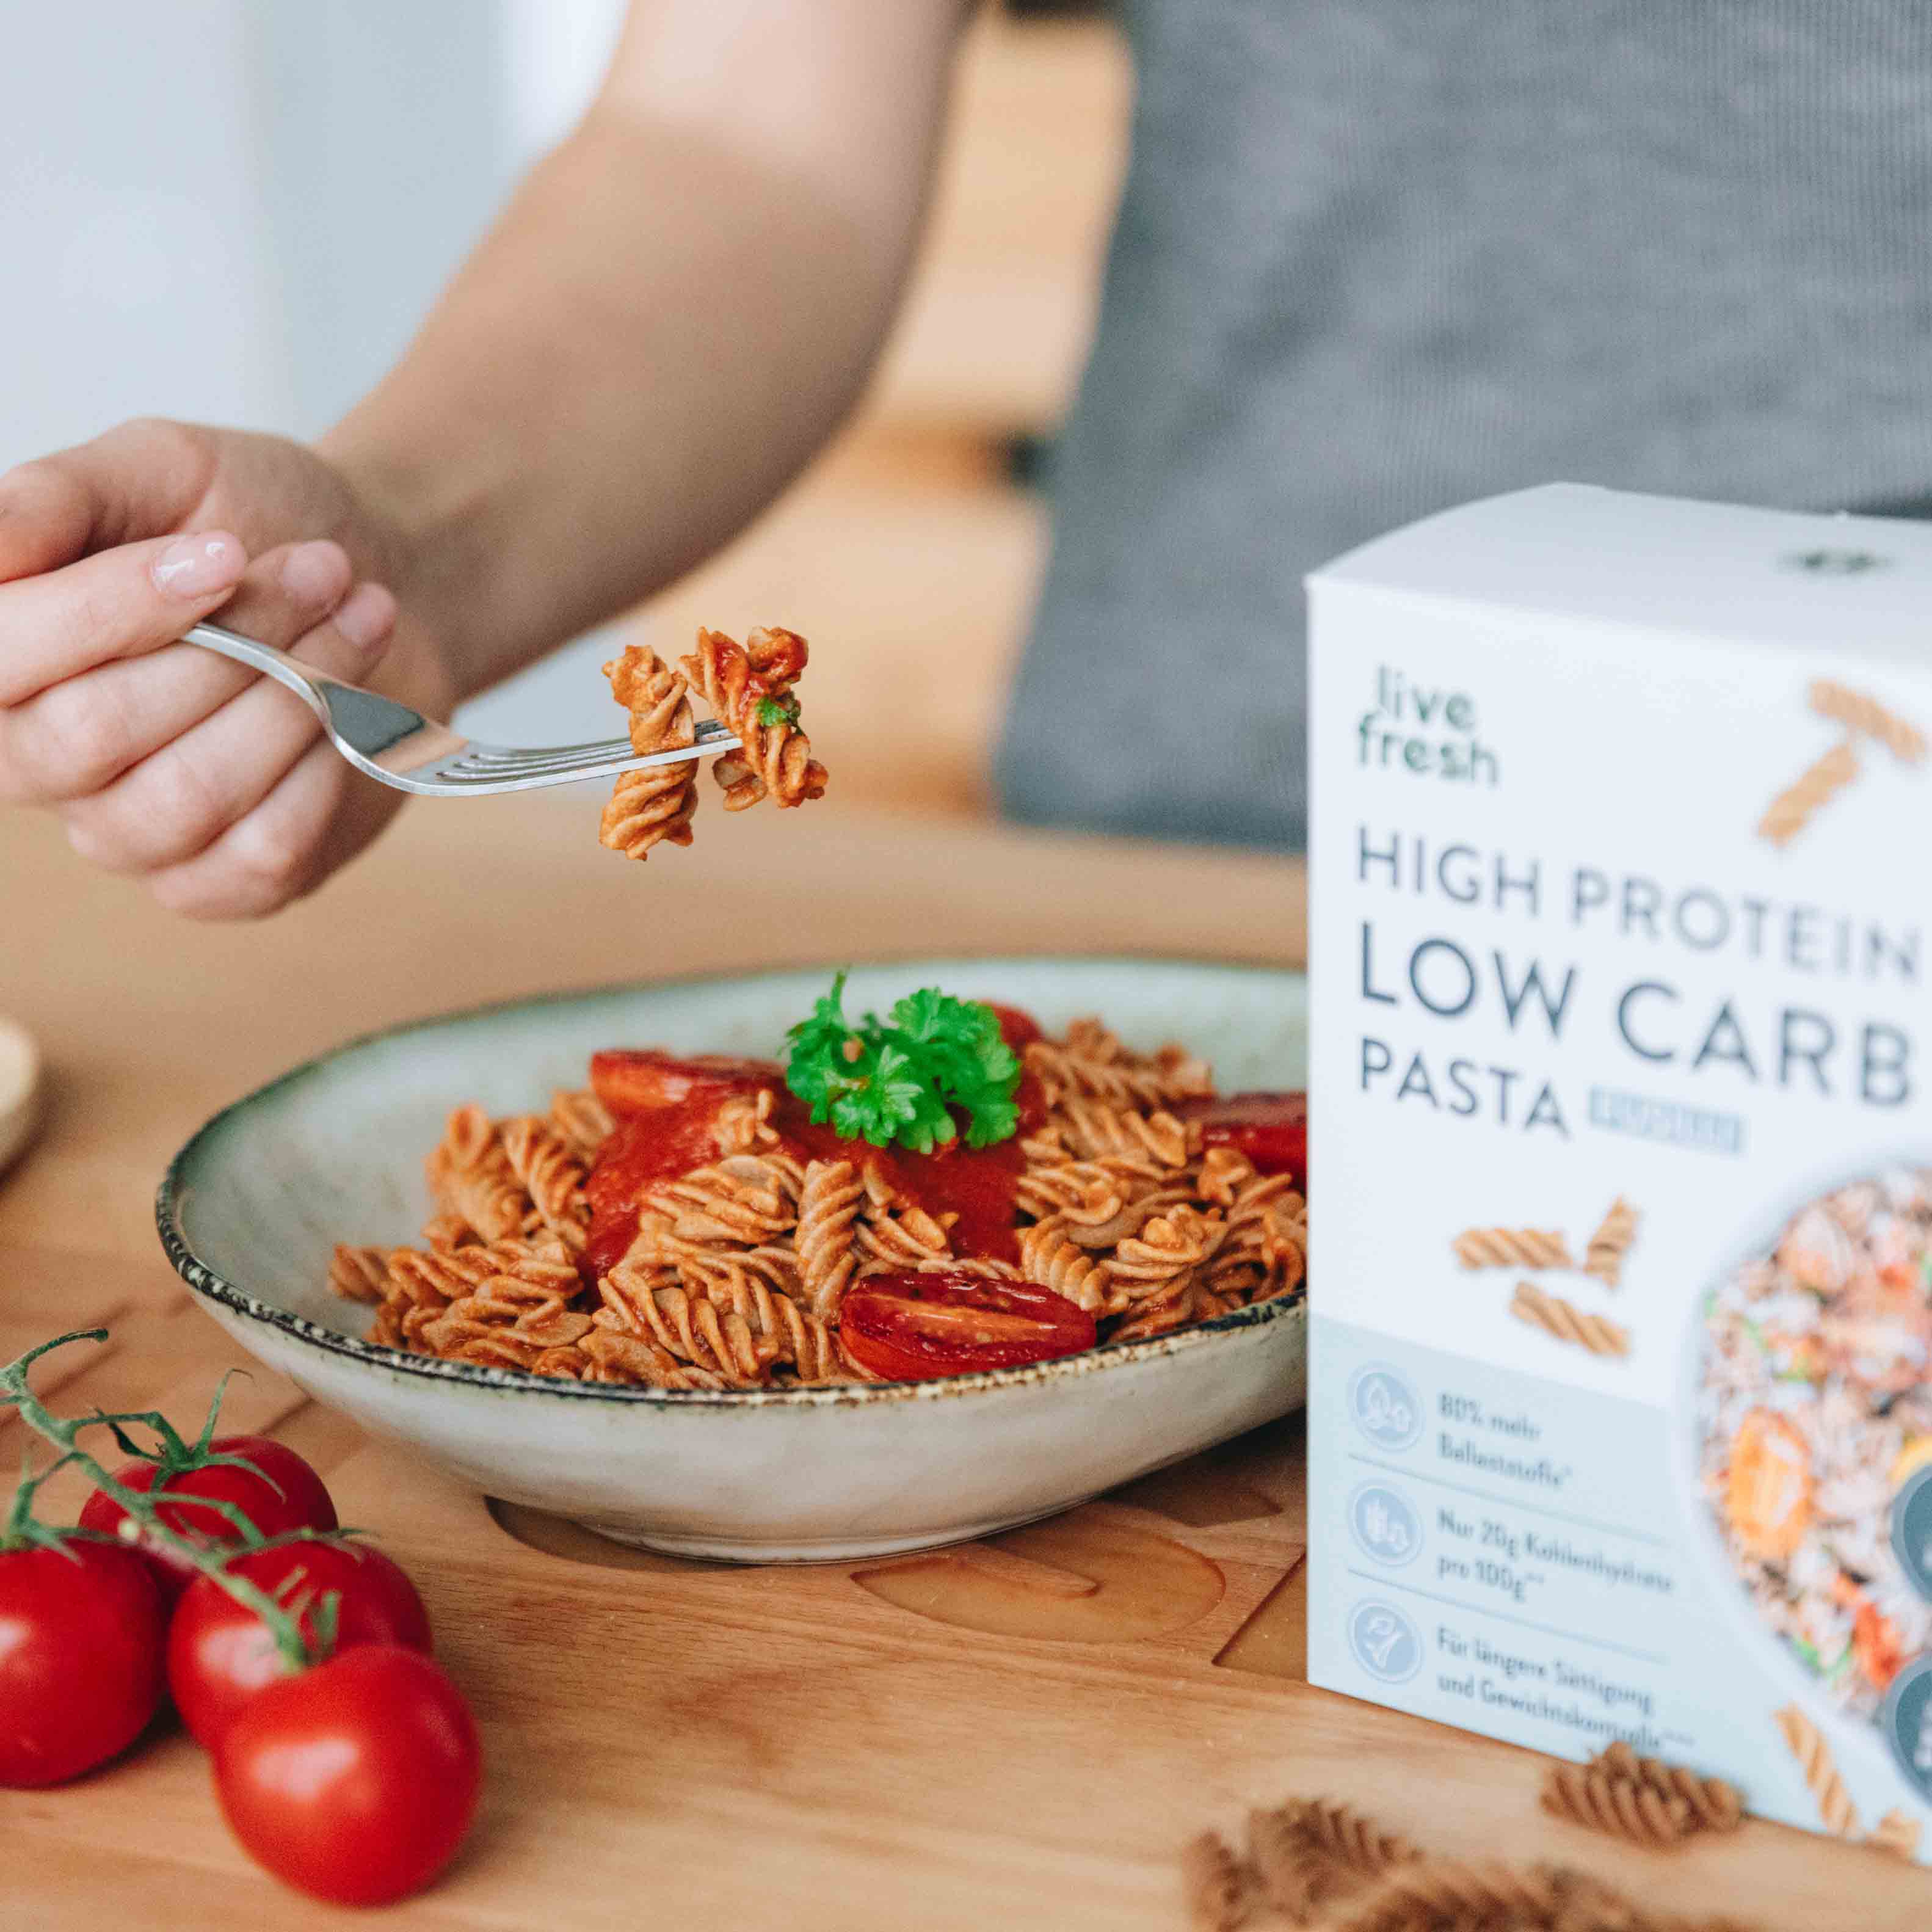 Low carb high protein pasta - Fusili